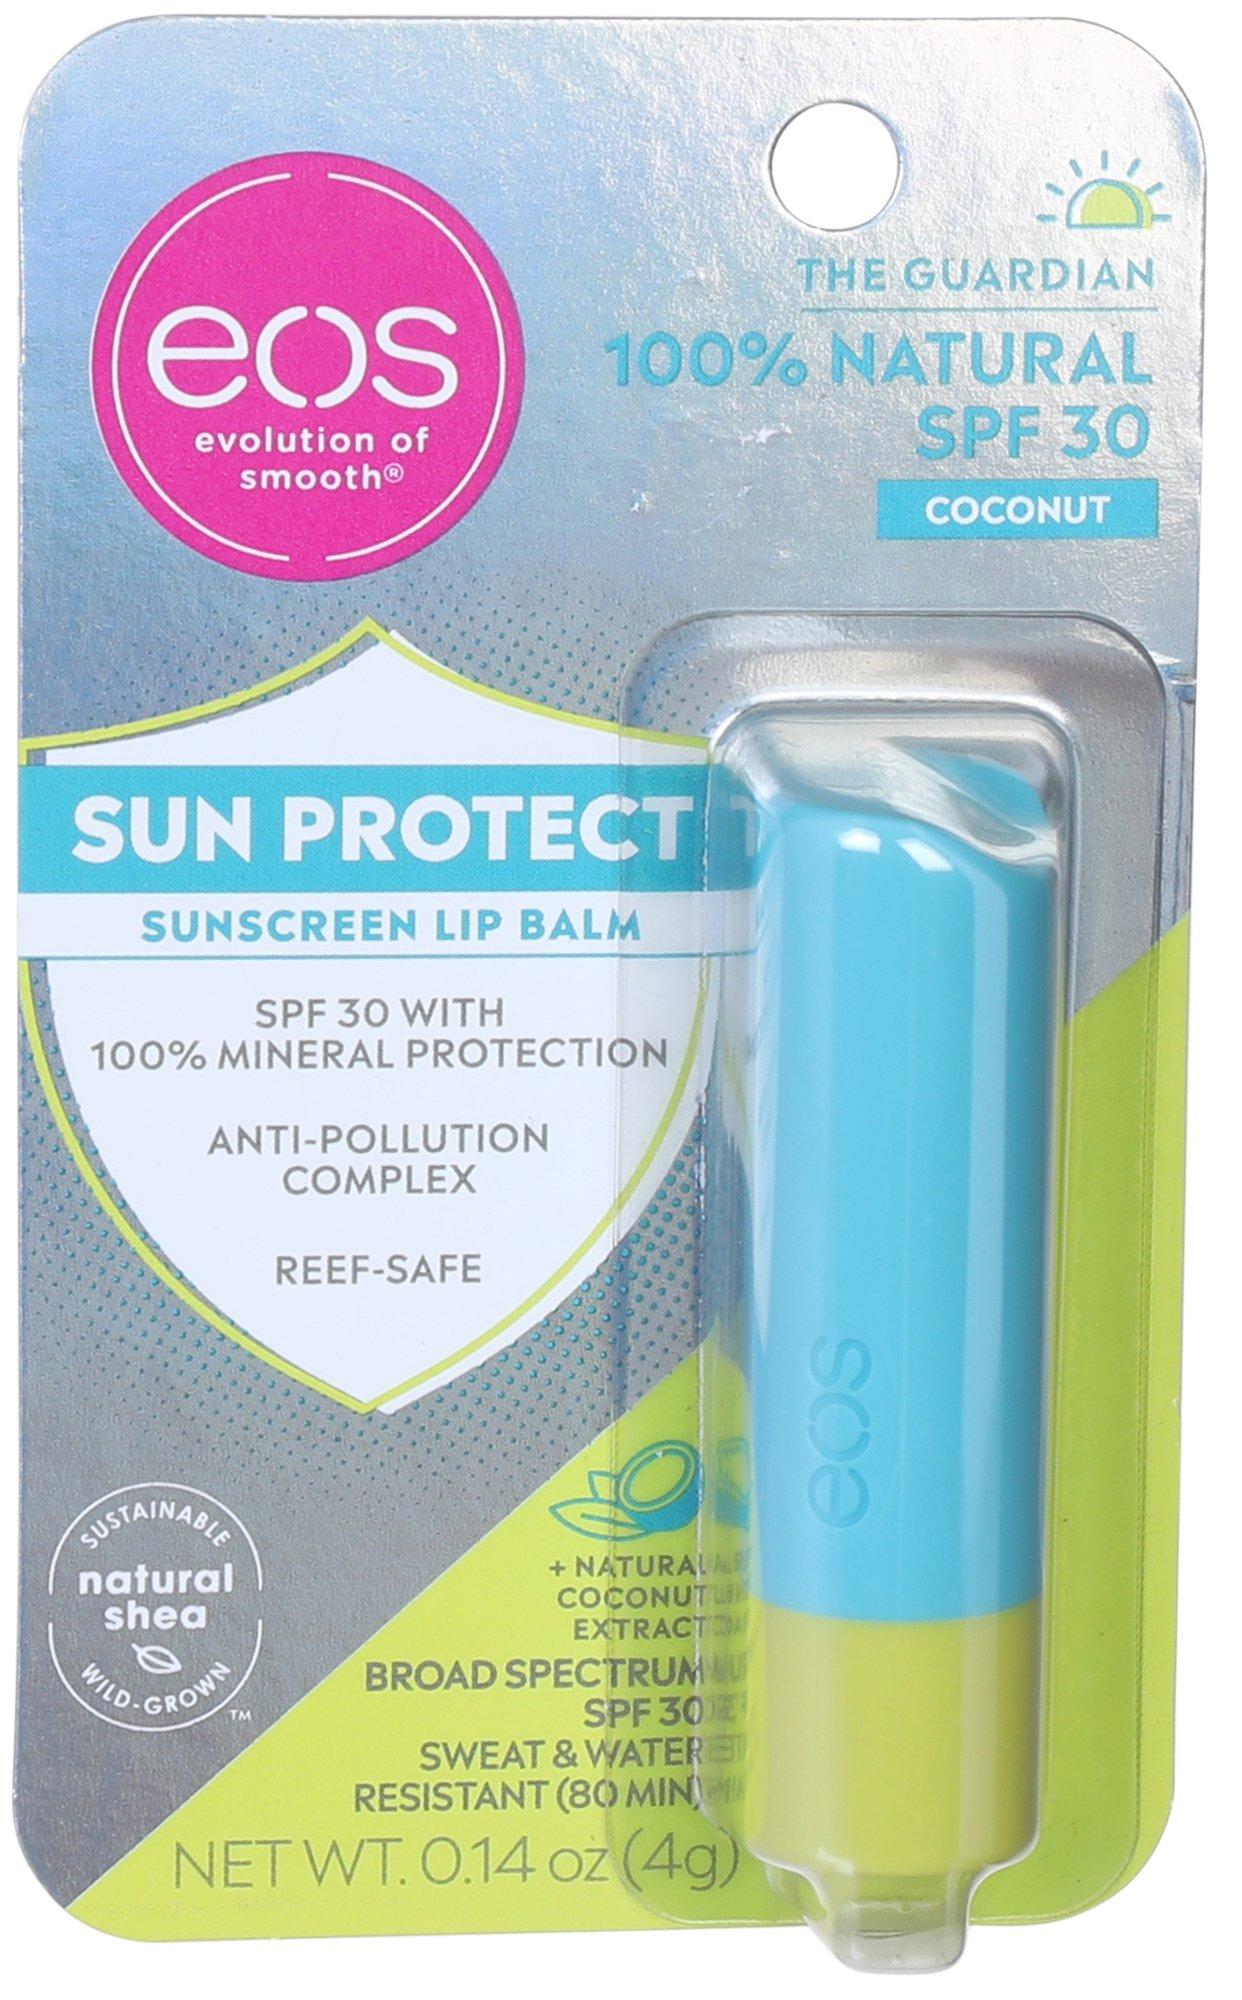 EOS Sun Protect Coconut Natural SPF 30 Sunscreen